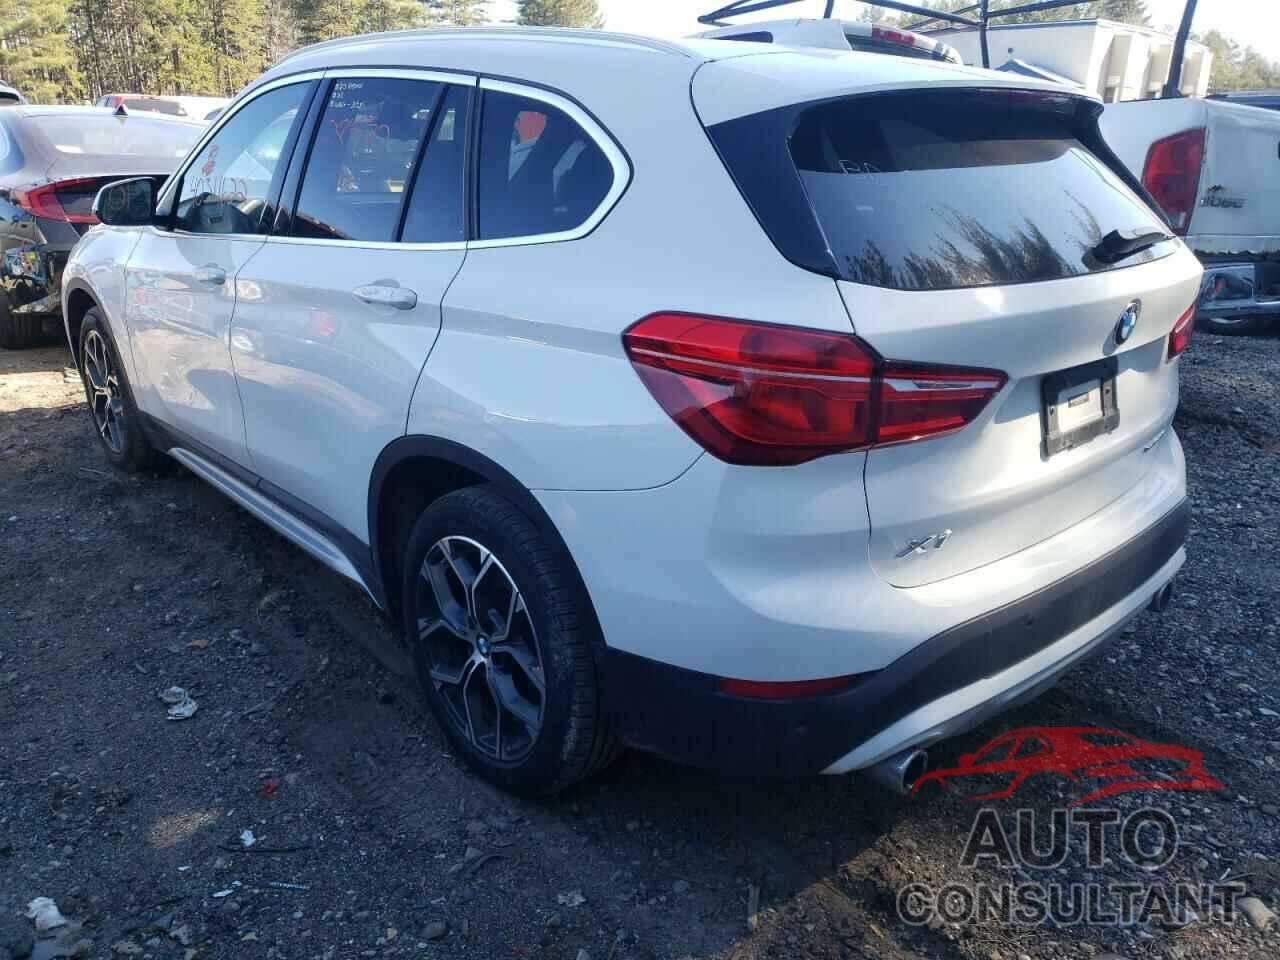 BMW X1 2020 - WBXJG9C01L5R31410